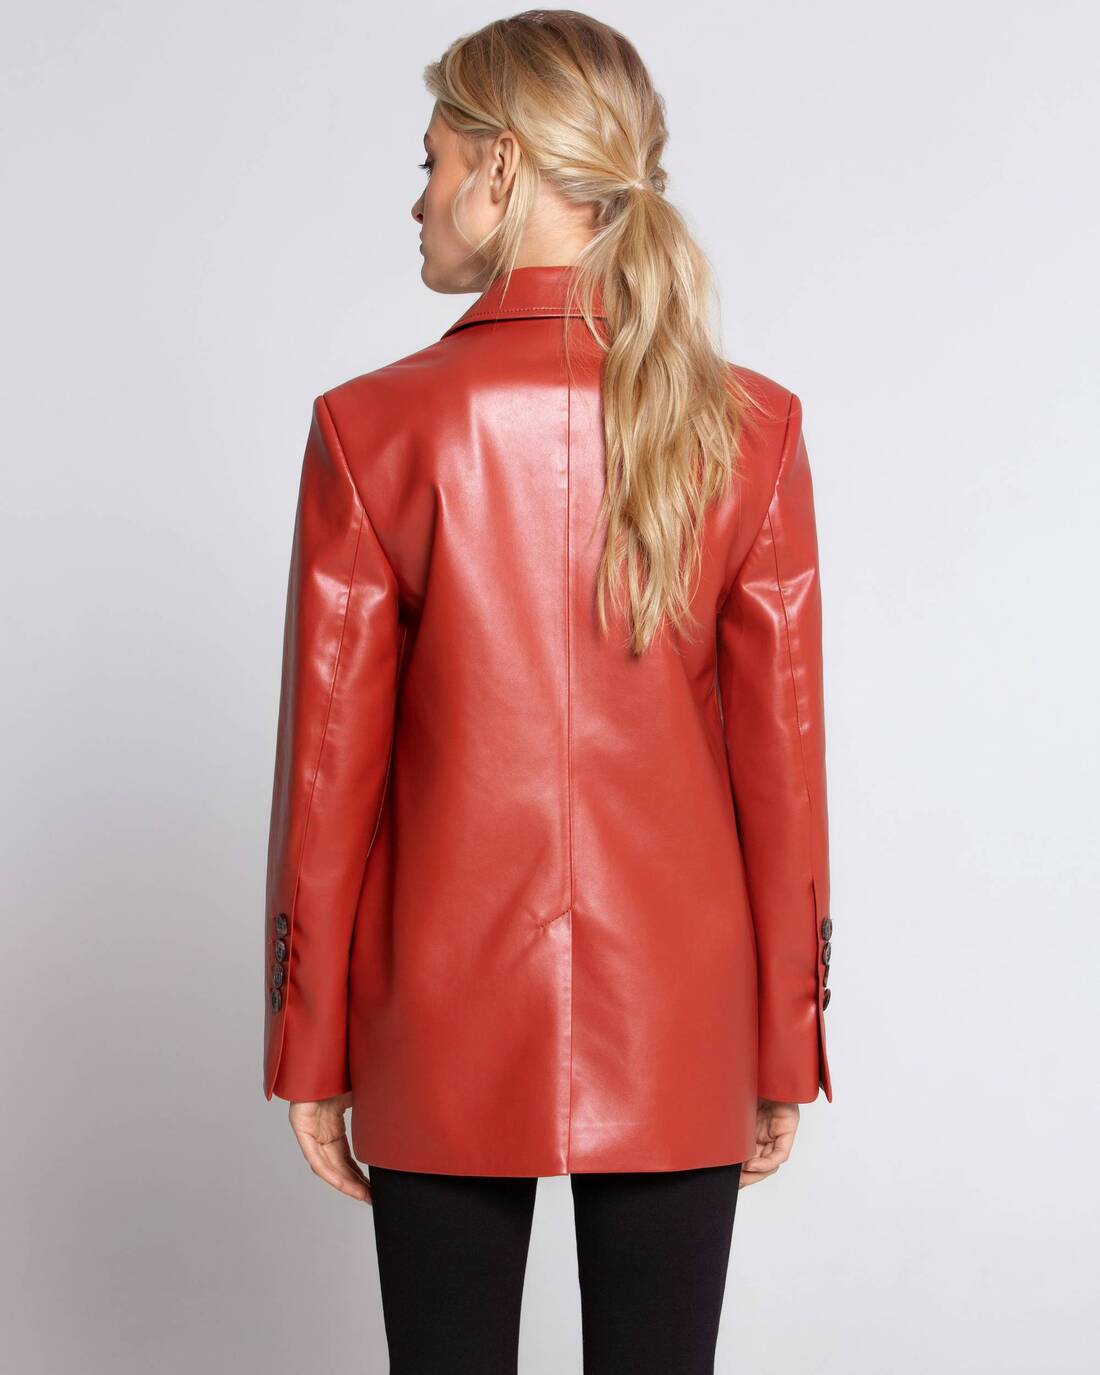 Eco leather menswear jacket